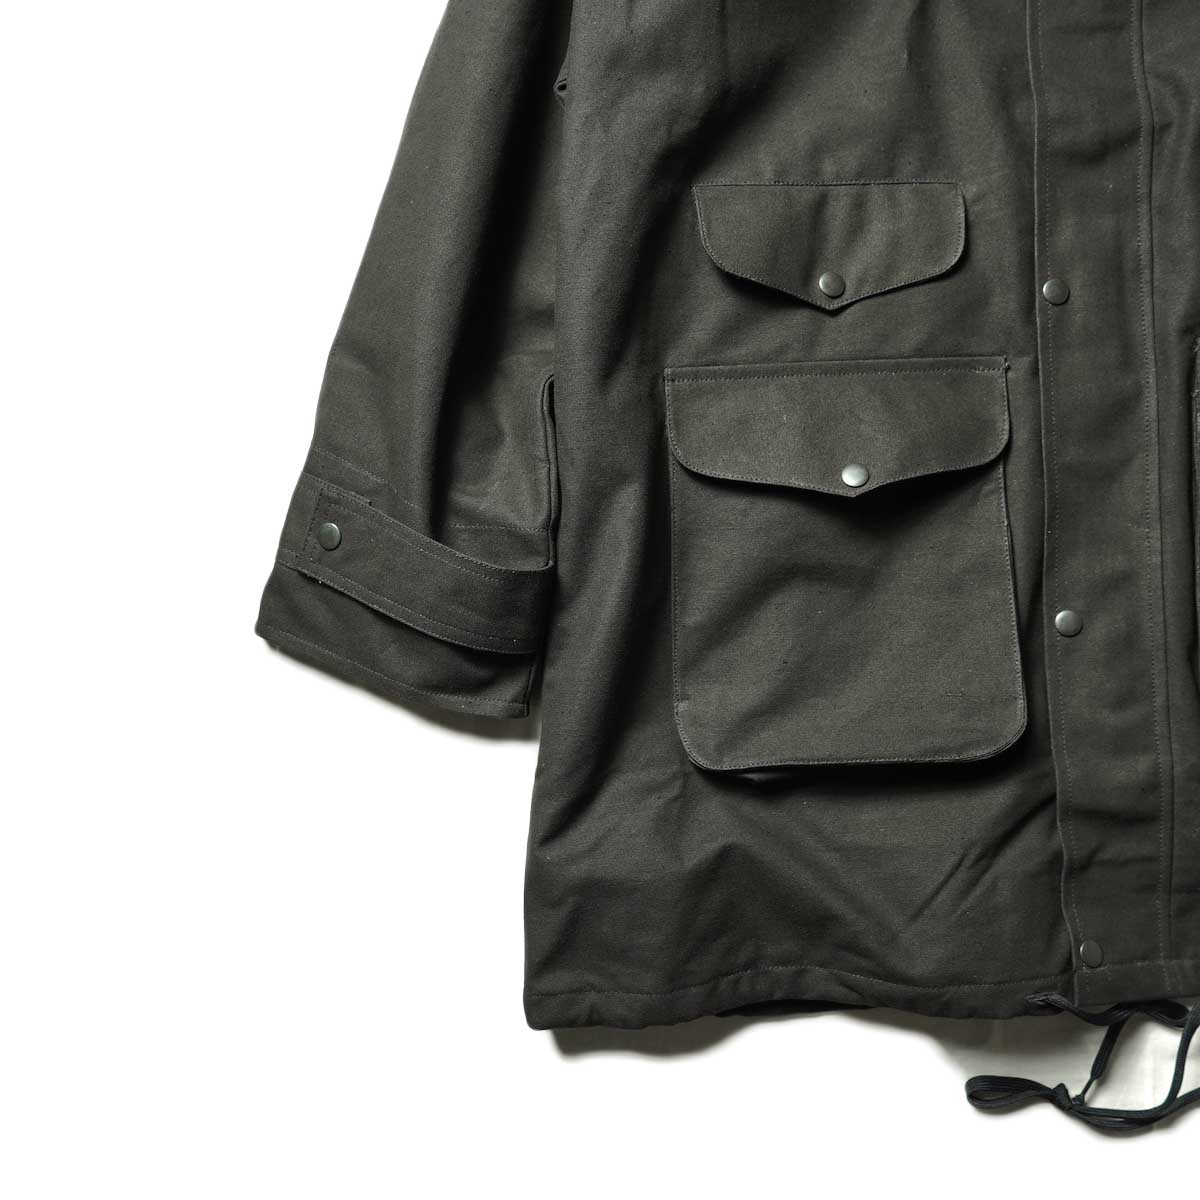 PORTRAITE / Classic Field Jacket Long - Canvas (Black)袖、裾